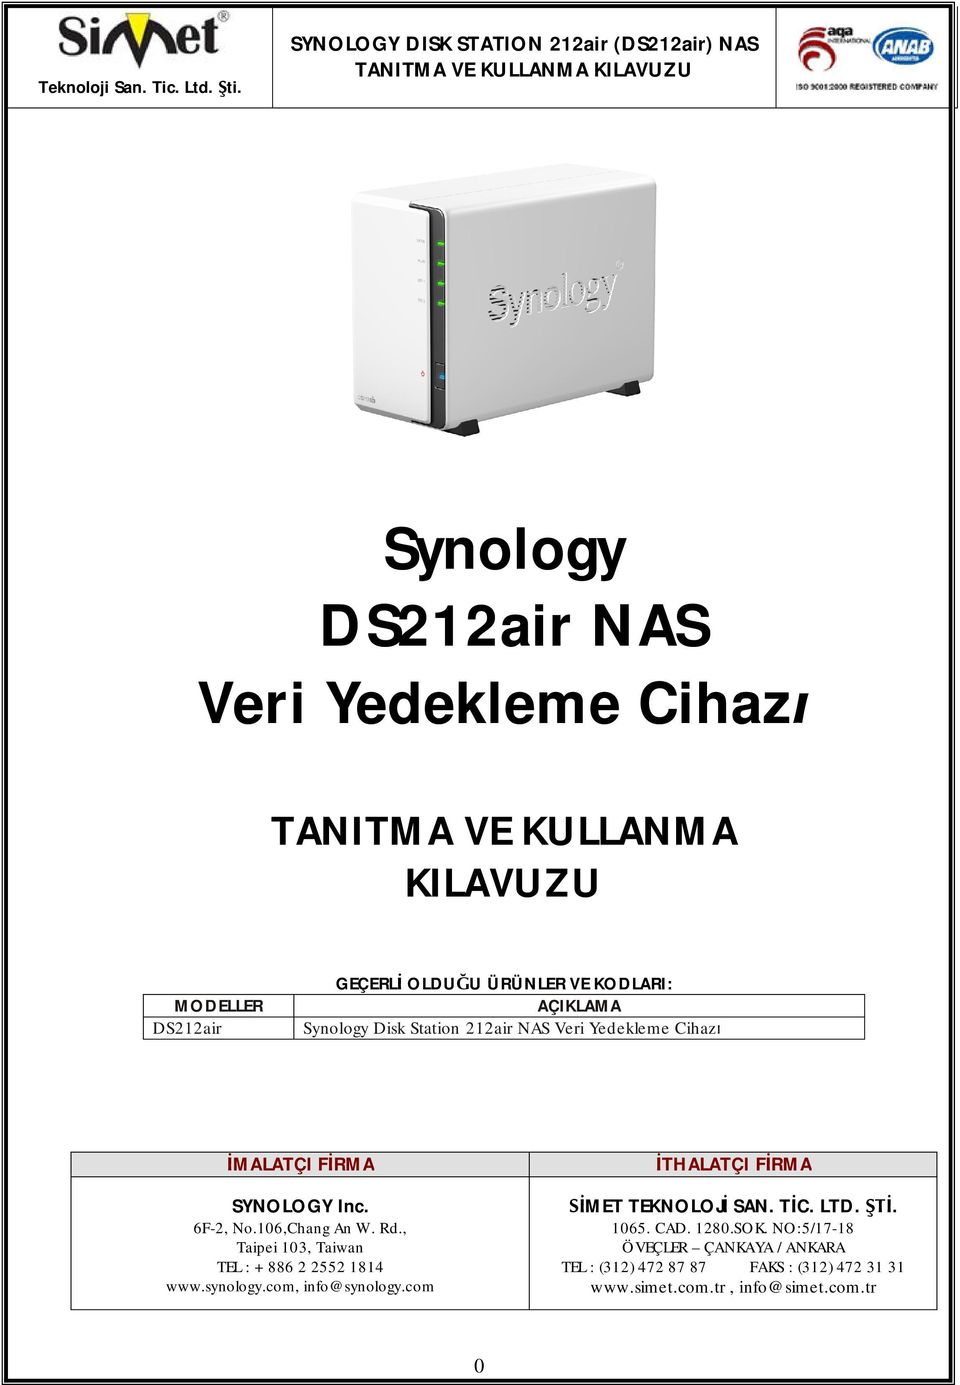 Synology Disk Station 212air NAS Veri Yedekleme Cihaz MALATÇI FRMA SYNOLOGY Inc. 6F-2, No.106,Chang An W. Rd.